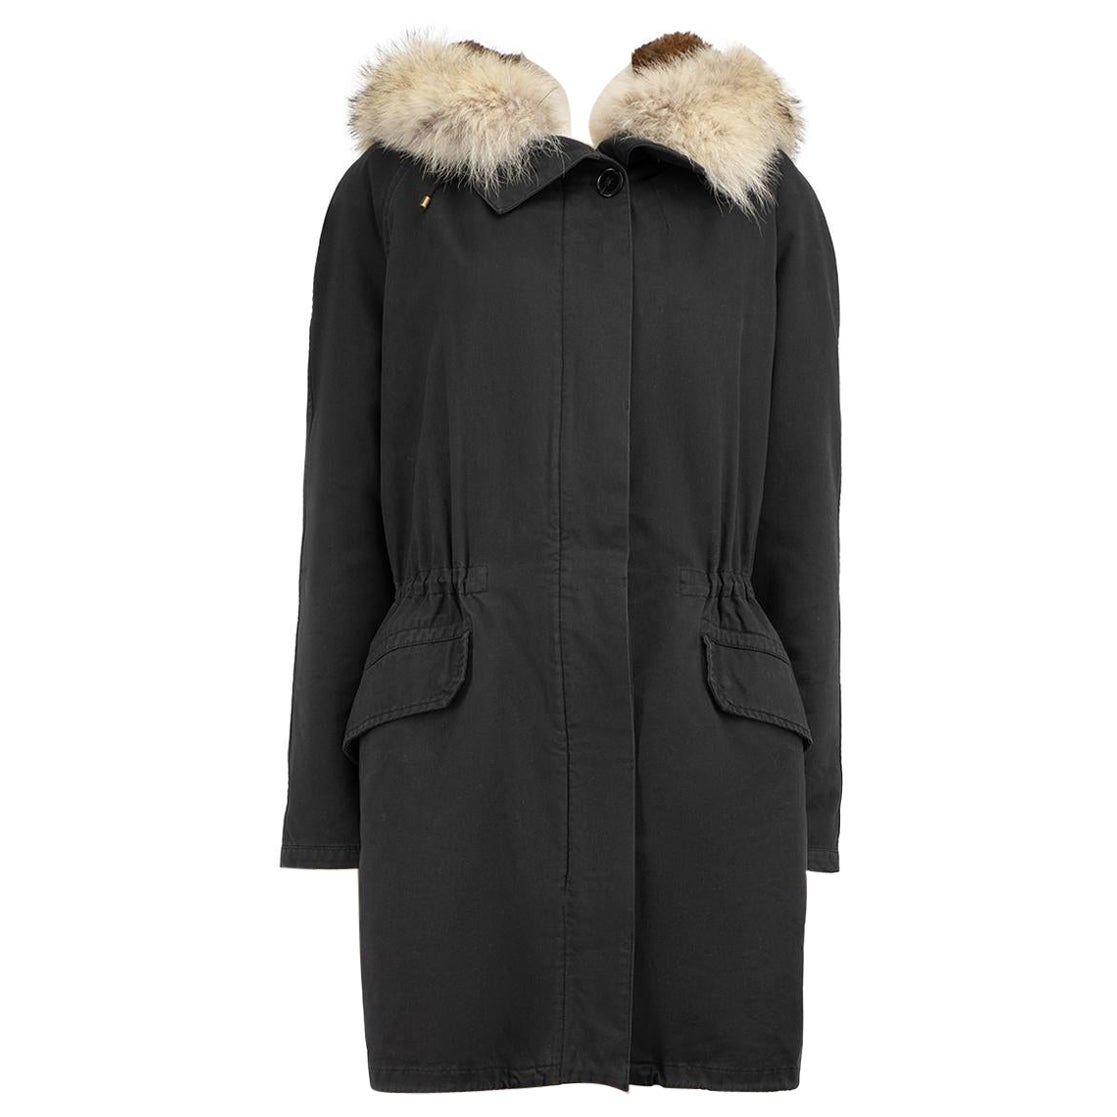 Yves Salomon Black Rabbit Fur Lined Parka Coat Size M For Sale